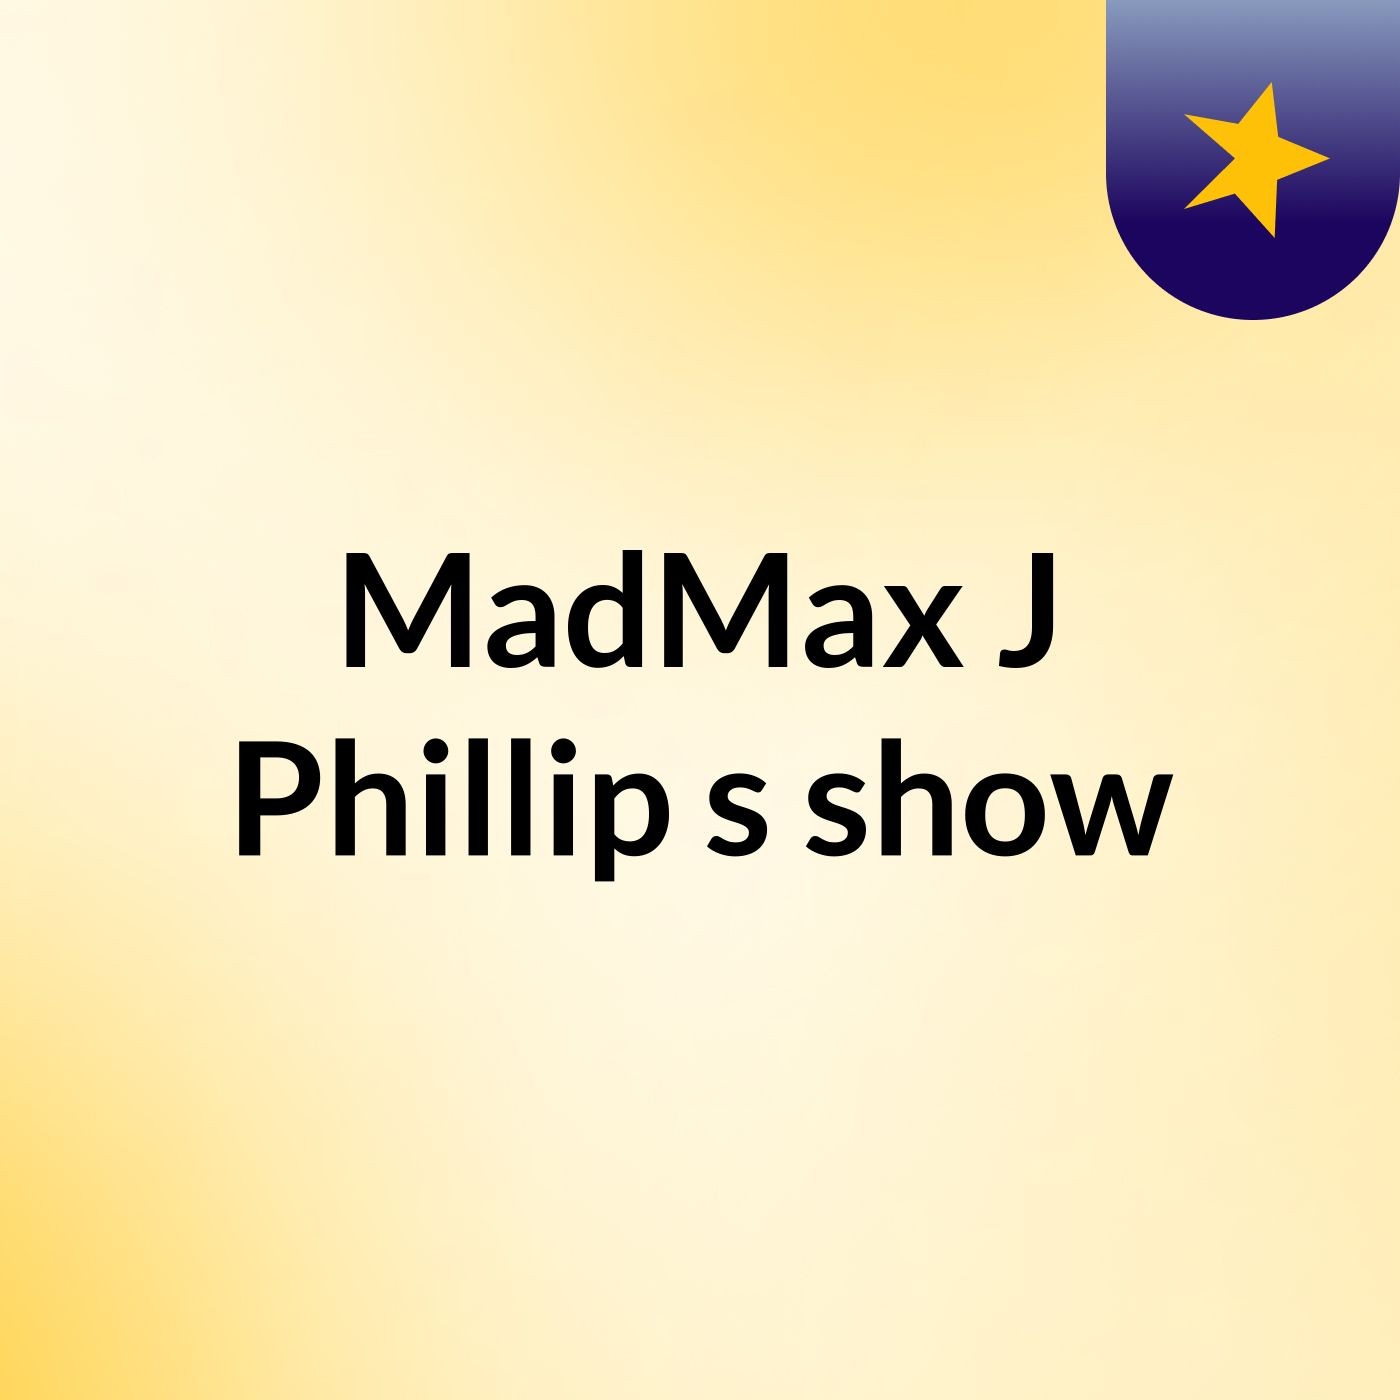 Episode 2 - MadMax J Phillip's show